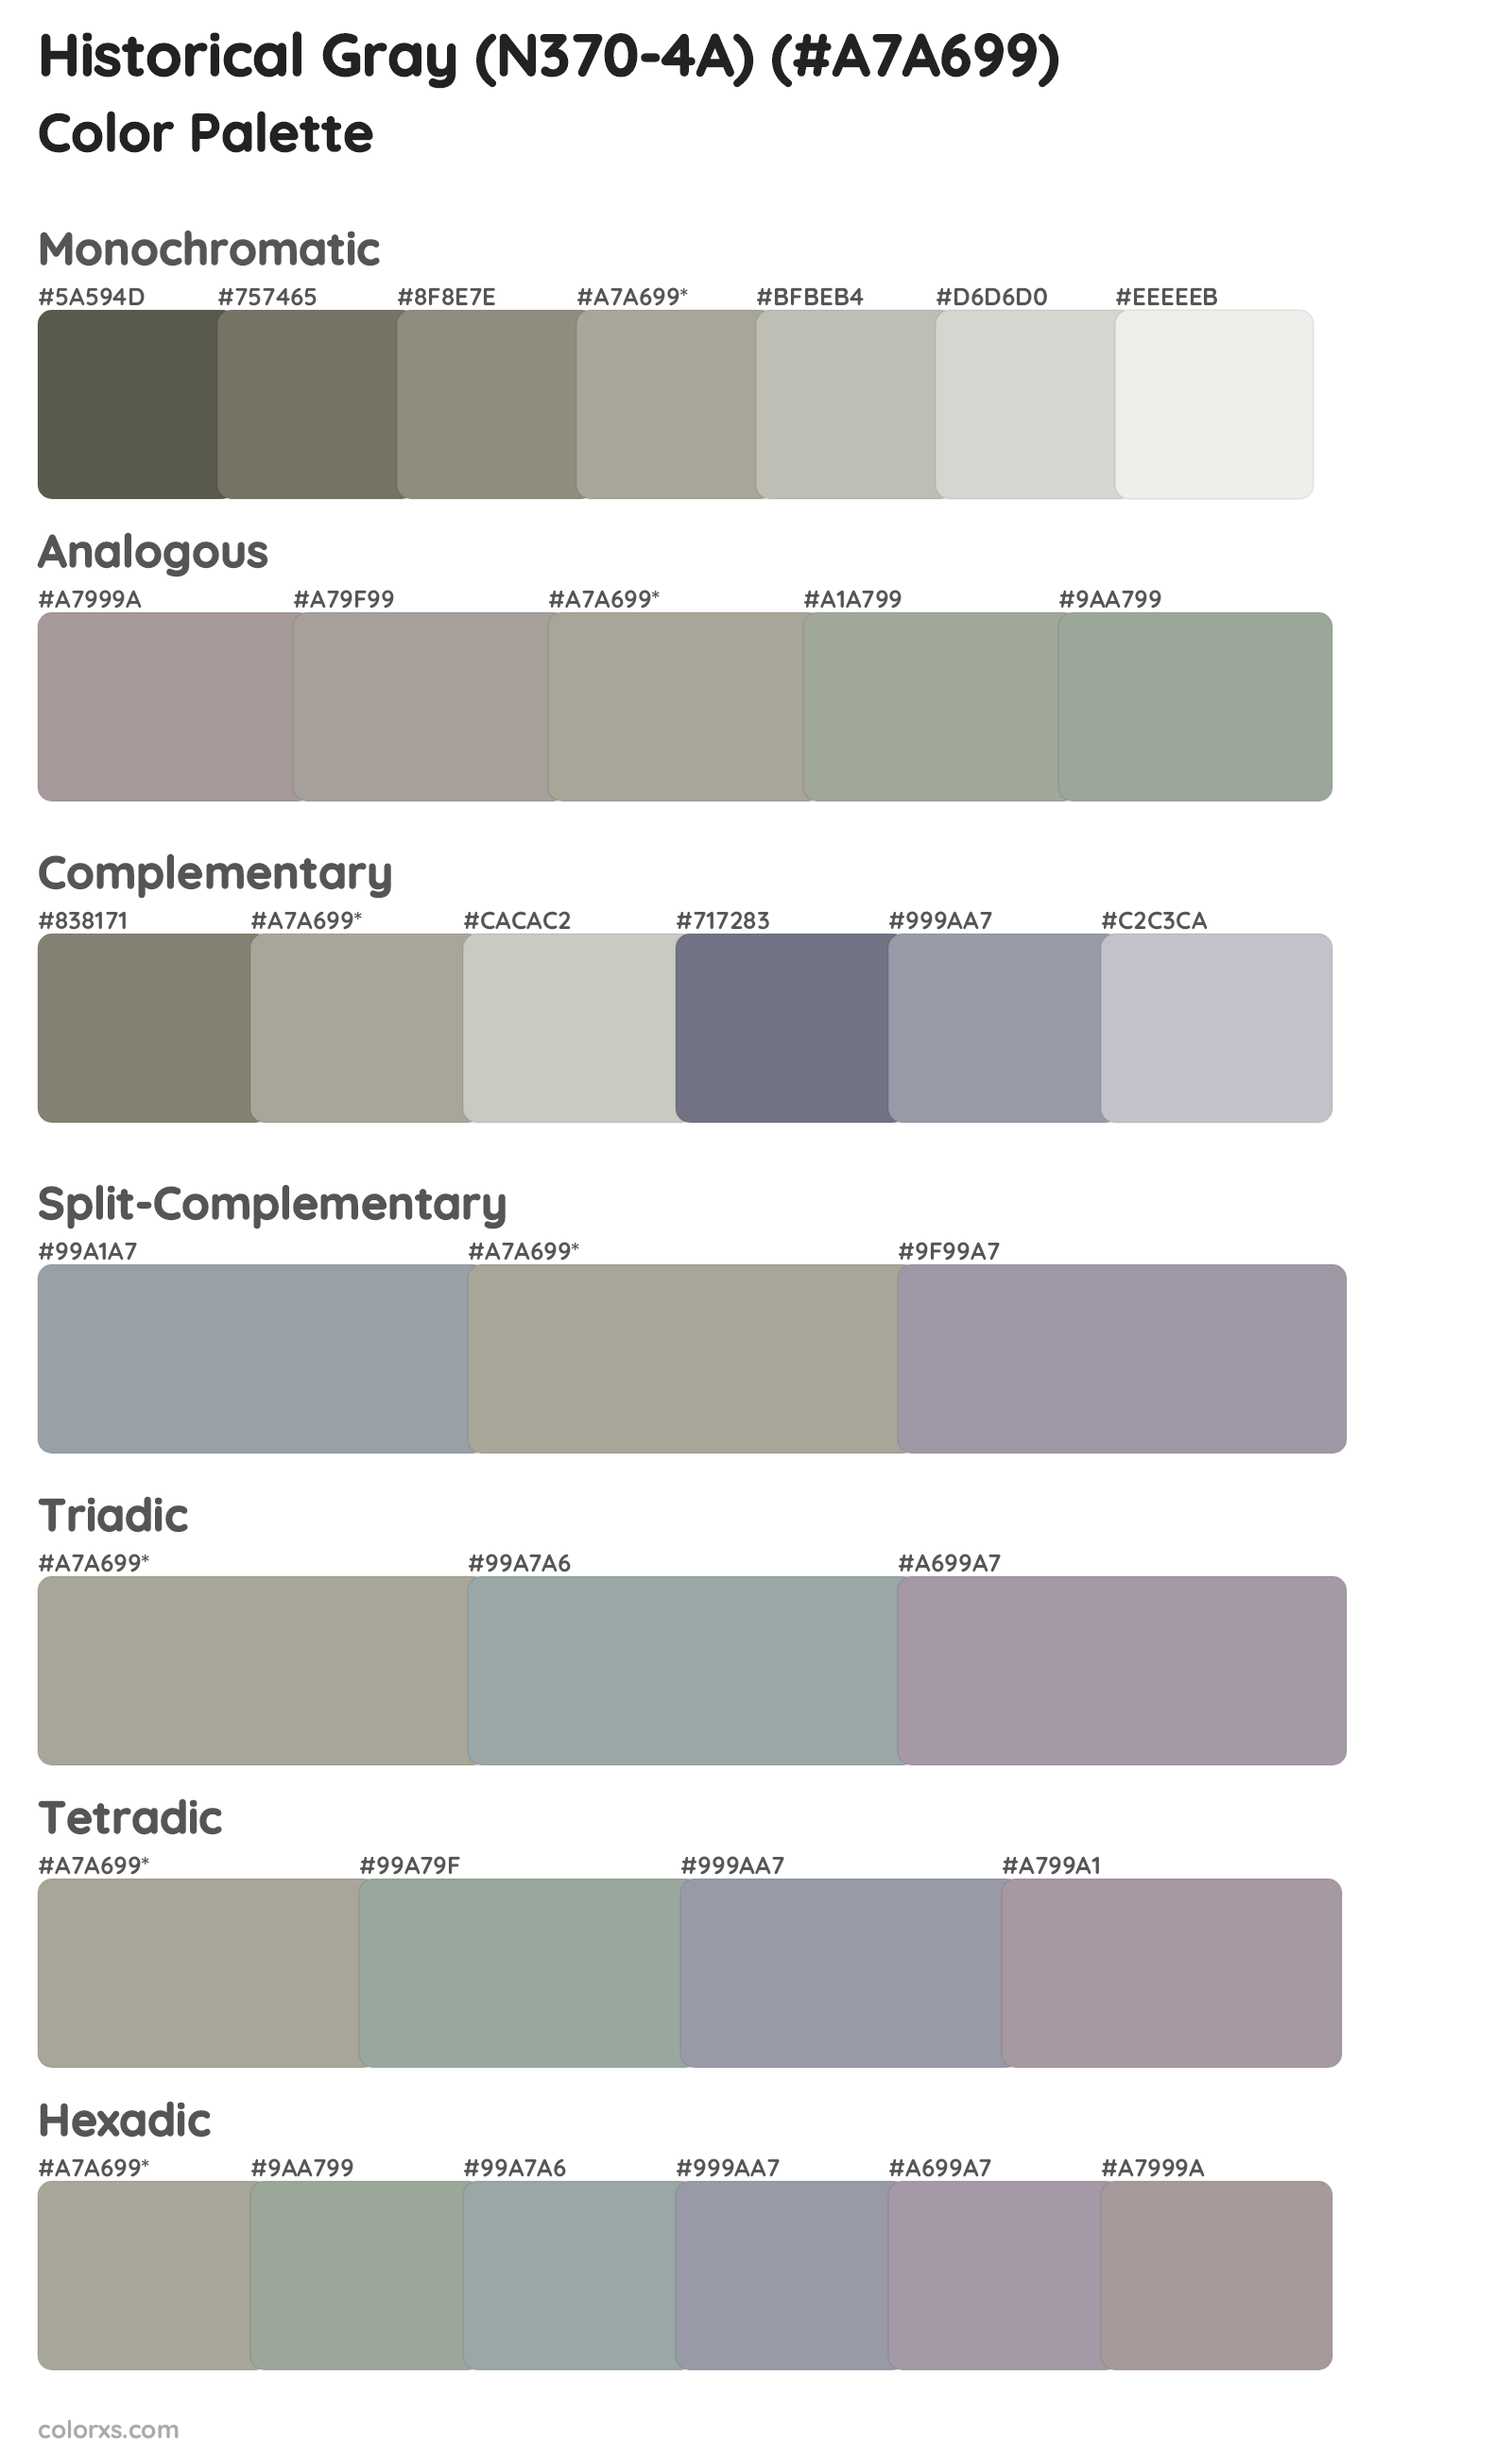 Historical Gray (N370-4A) Color Scheme Palettes